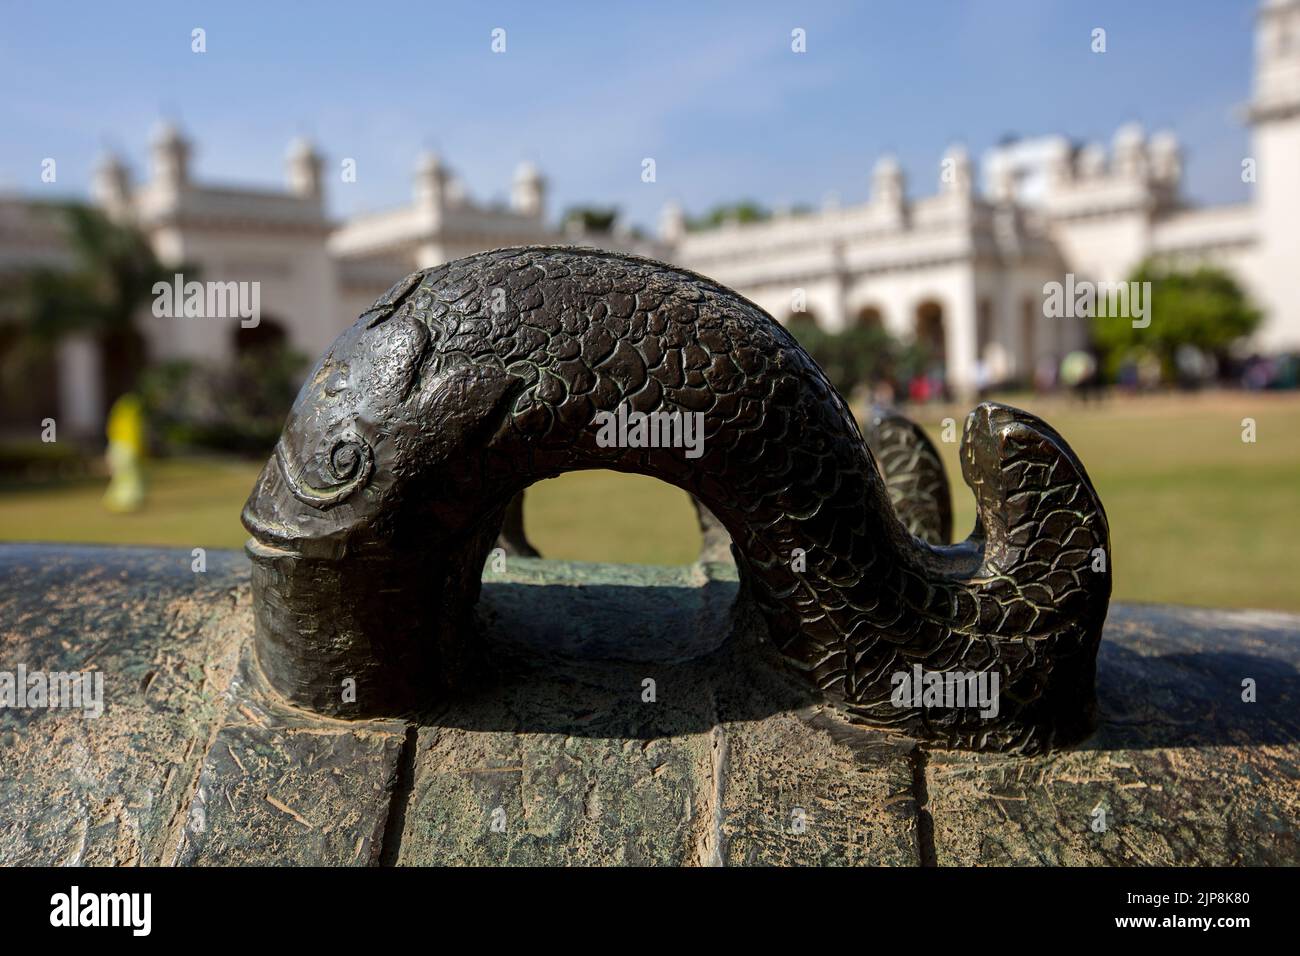 Fish sculpture on cannon, Chowmahalla Palace, Chowmahallat Palace, Nizam Palace, Hyderabad, Andhra Pradesh, Telangana, India Stock Photo